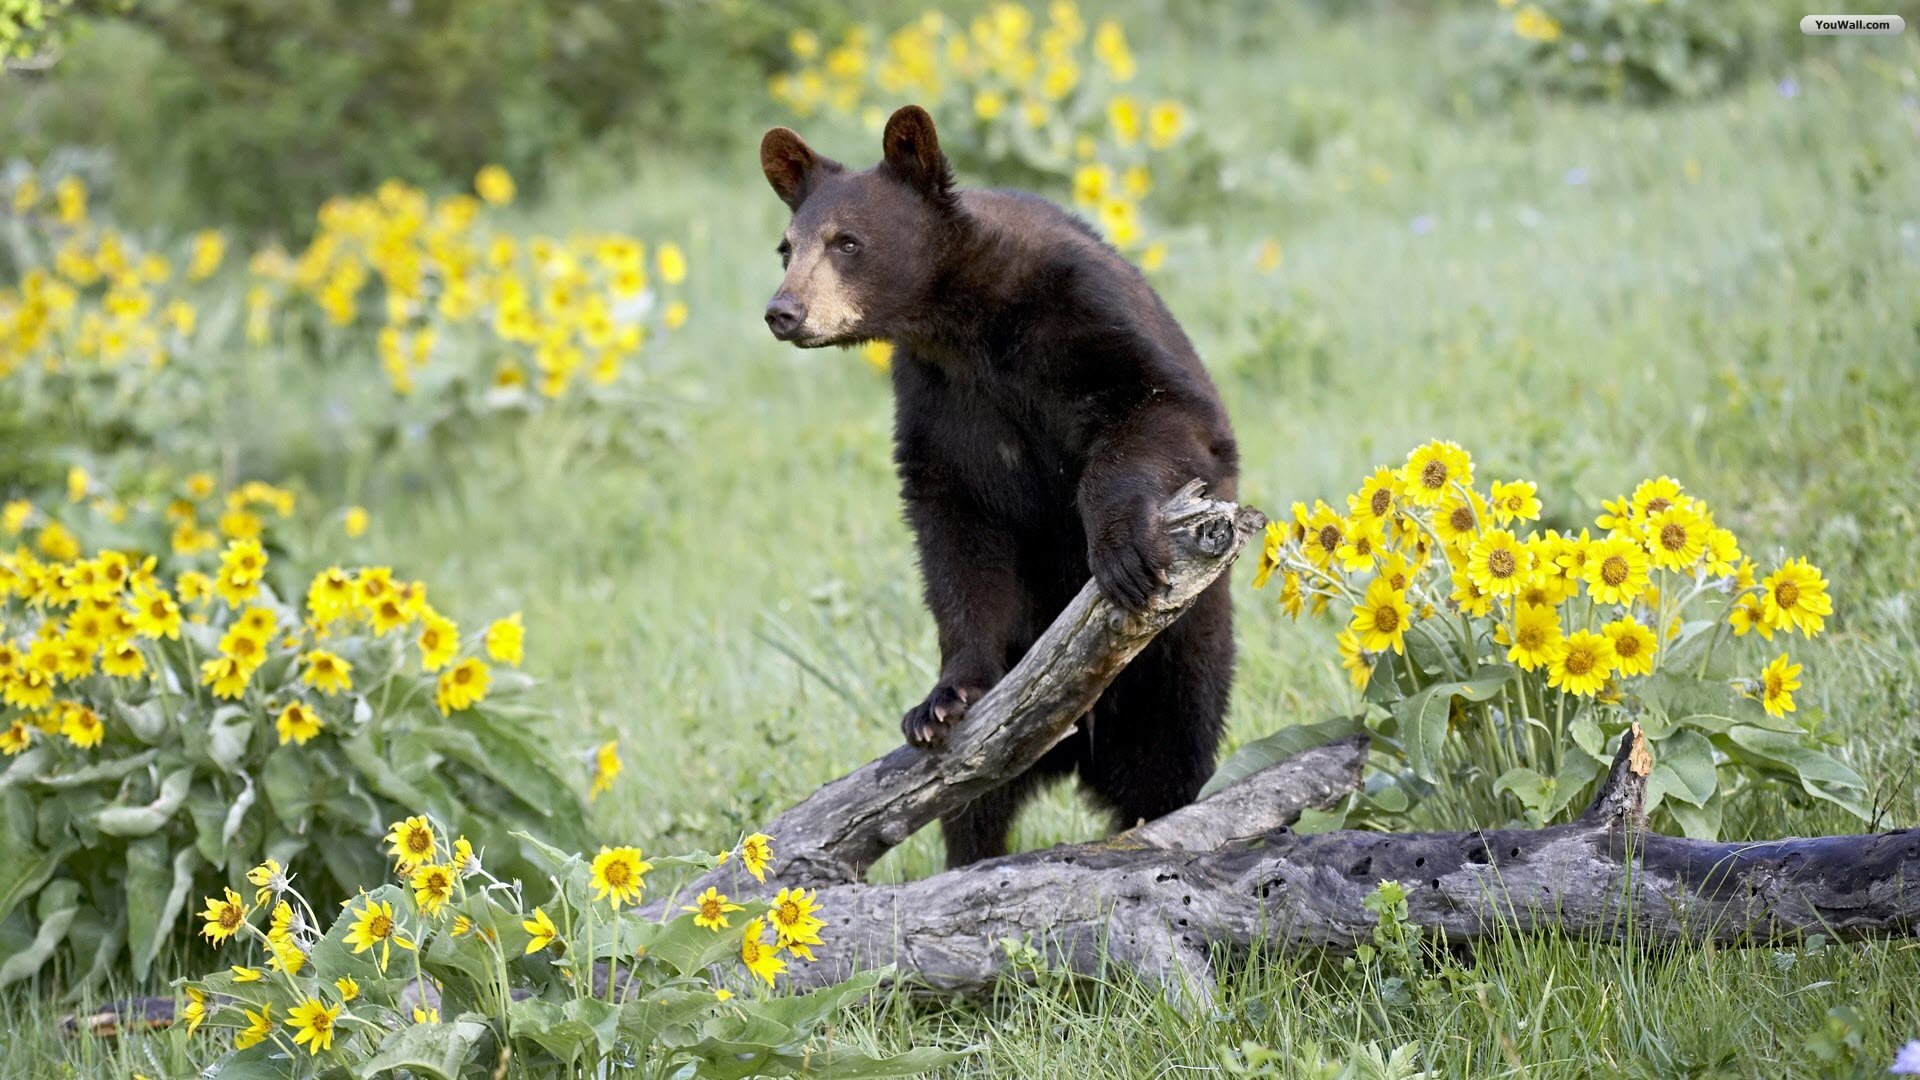 Download The Perched Bear Wallpaper, Perched Bear Iphone - Cute Black Bear - HD Wallpaper 